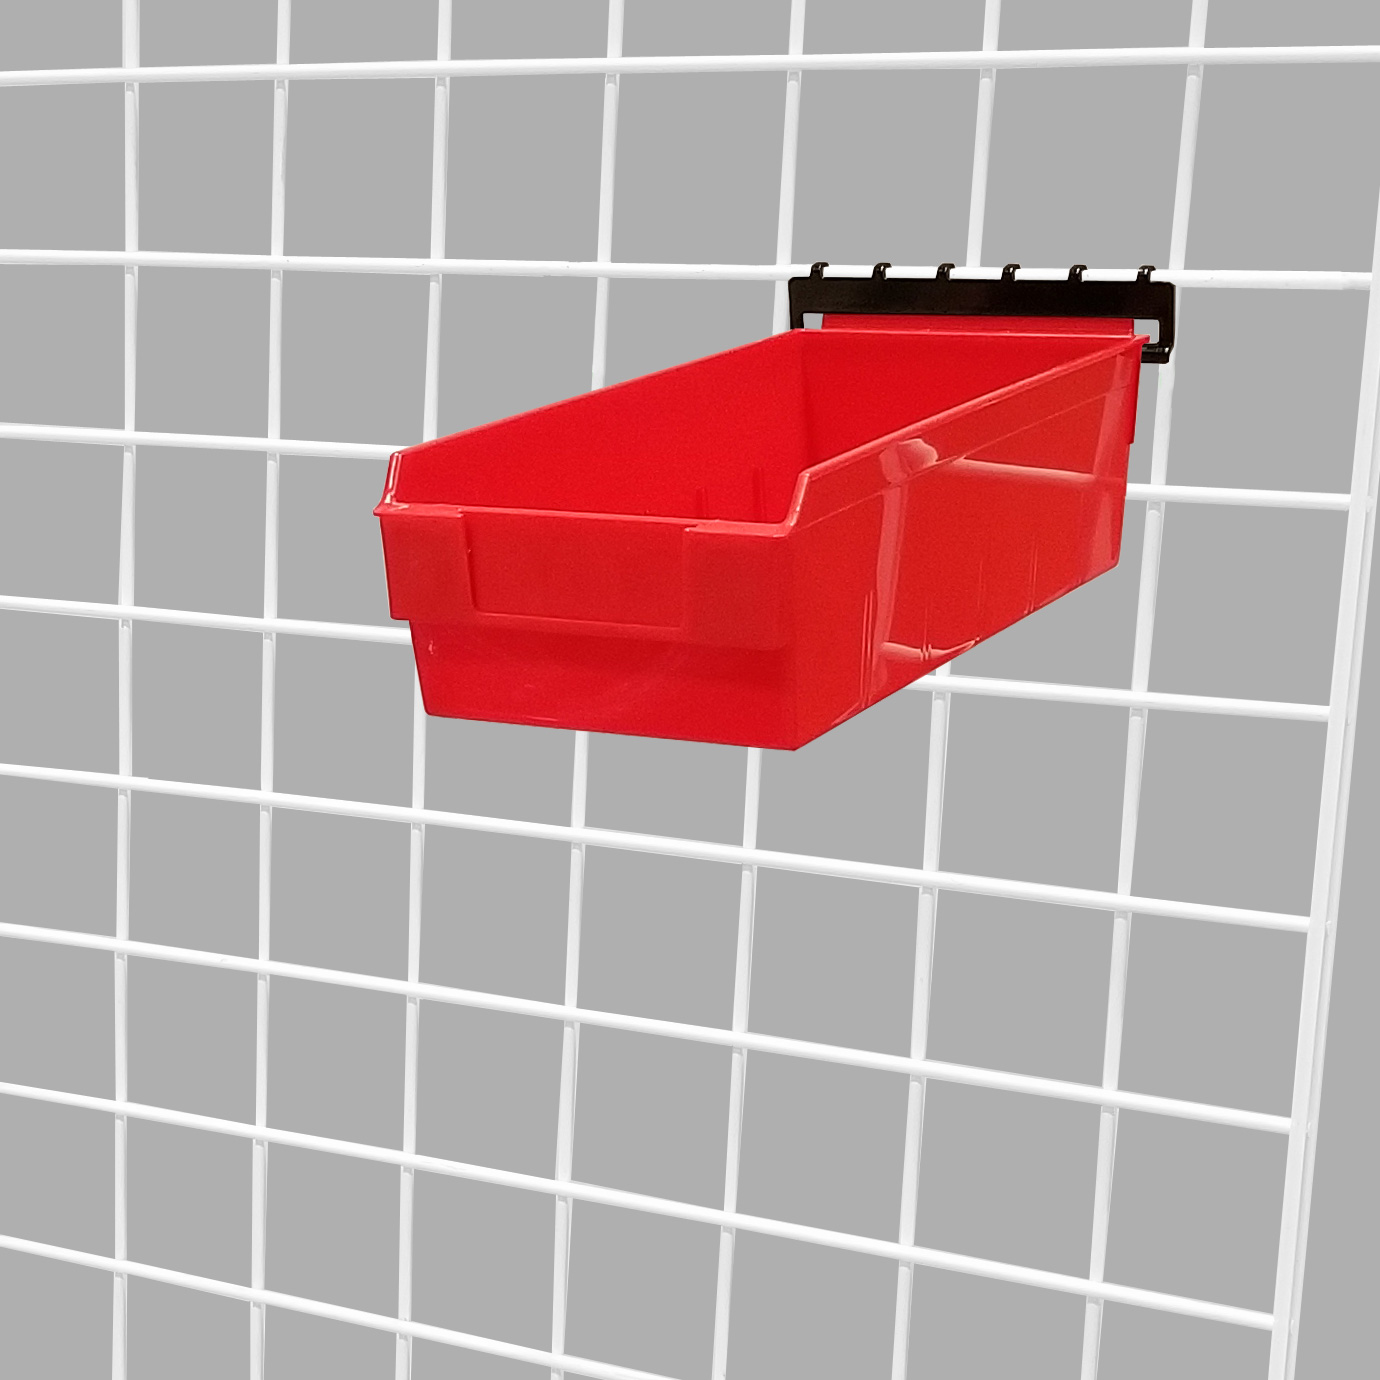 Red Shelfbox 300 Display Bin w/ Grid Adaptor